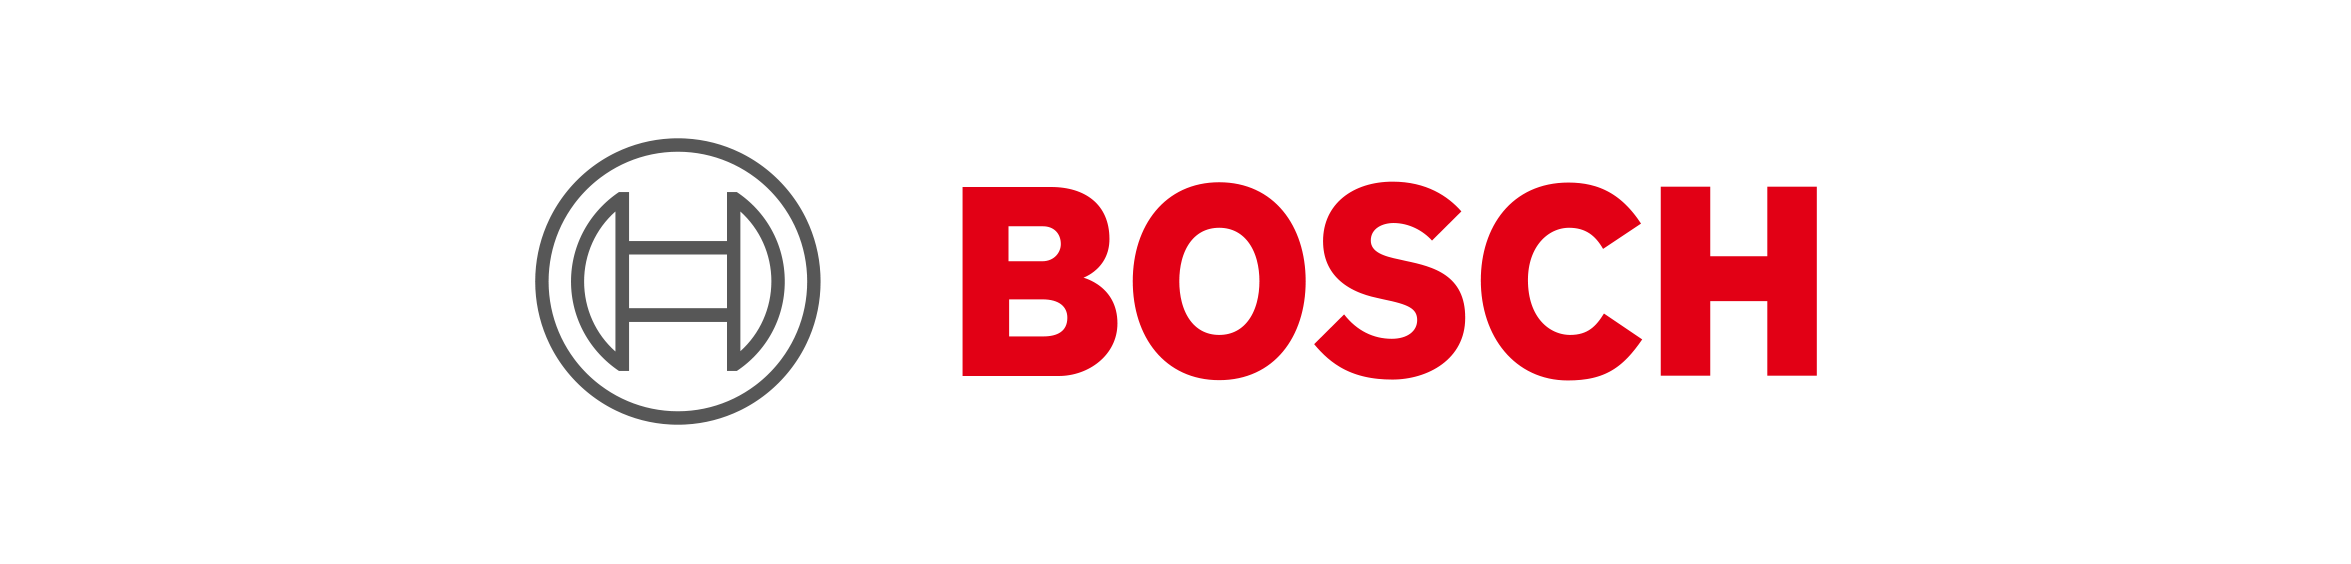 Sanitherm GmbH BOSCH Logo